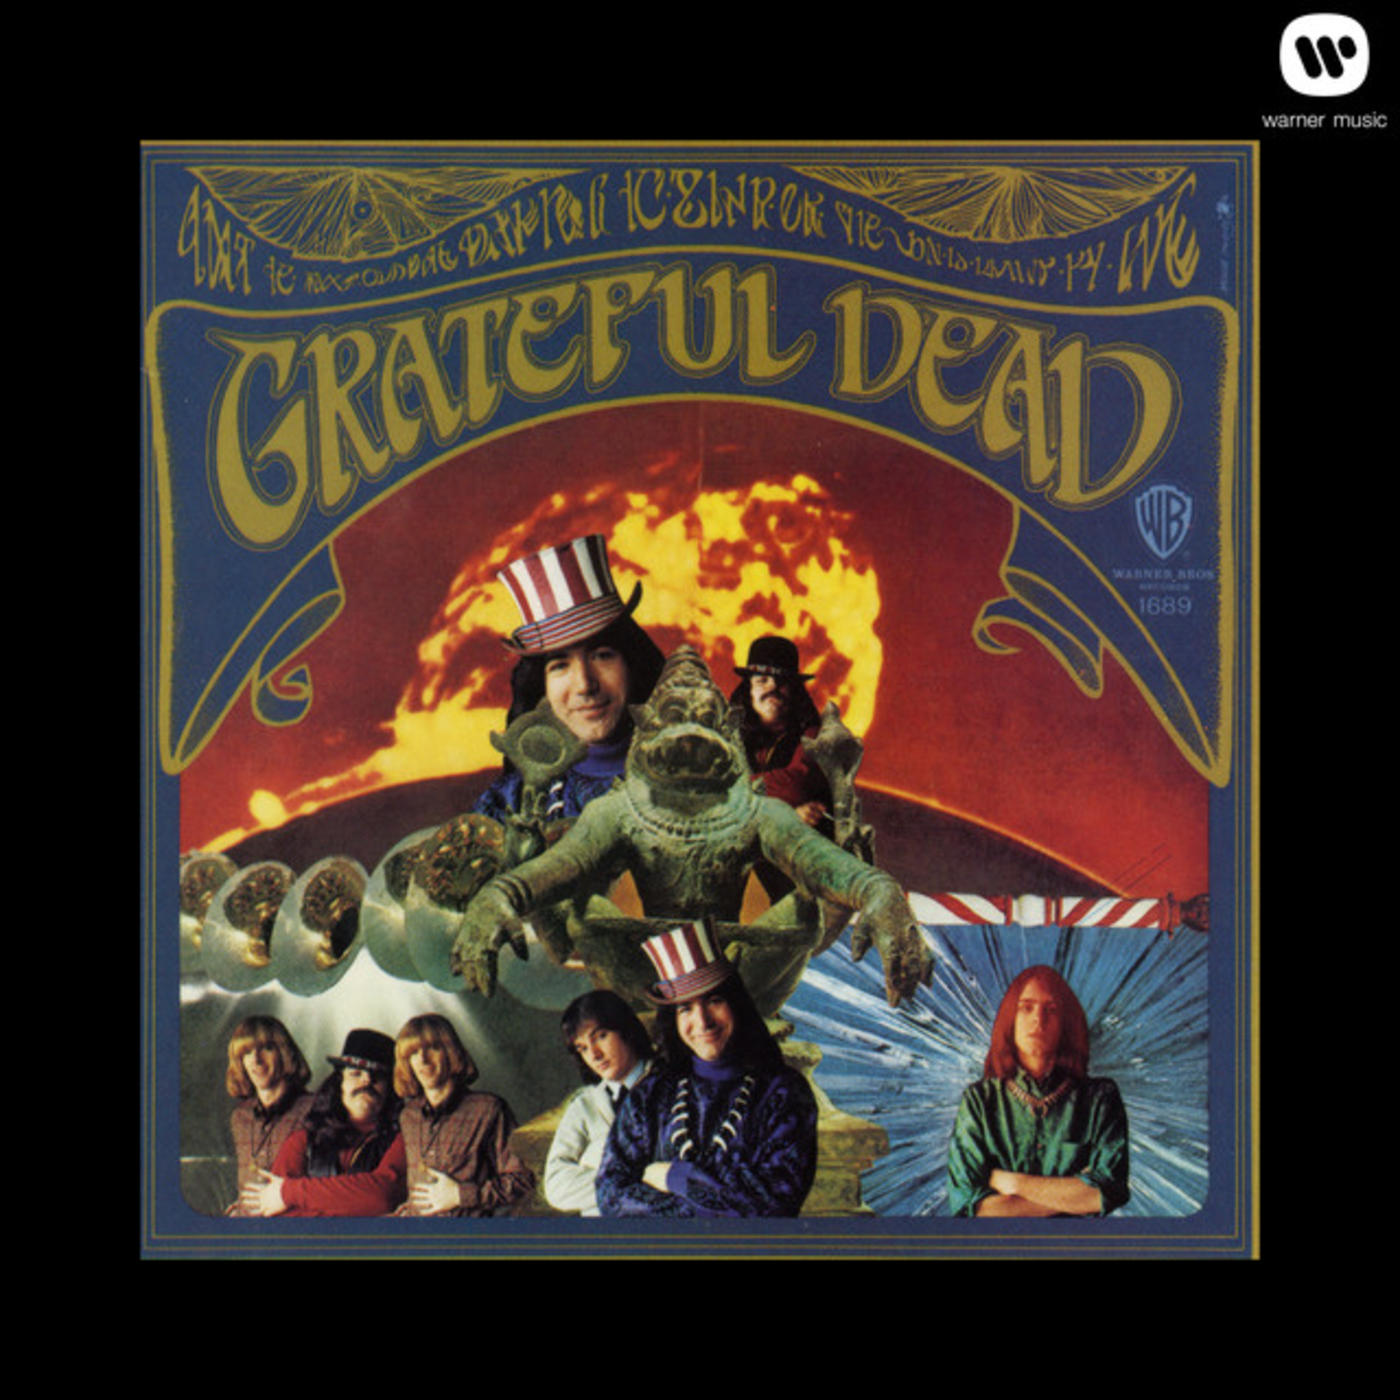 Grateful Dead [Expanded]